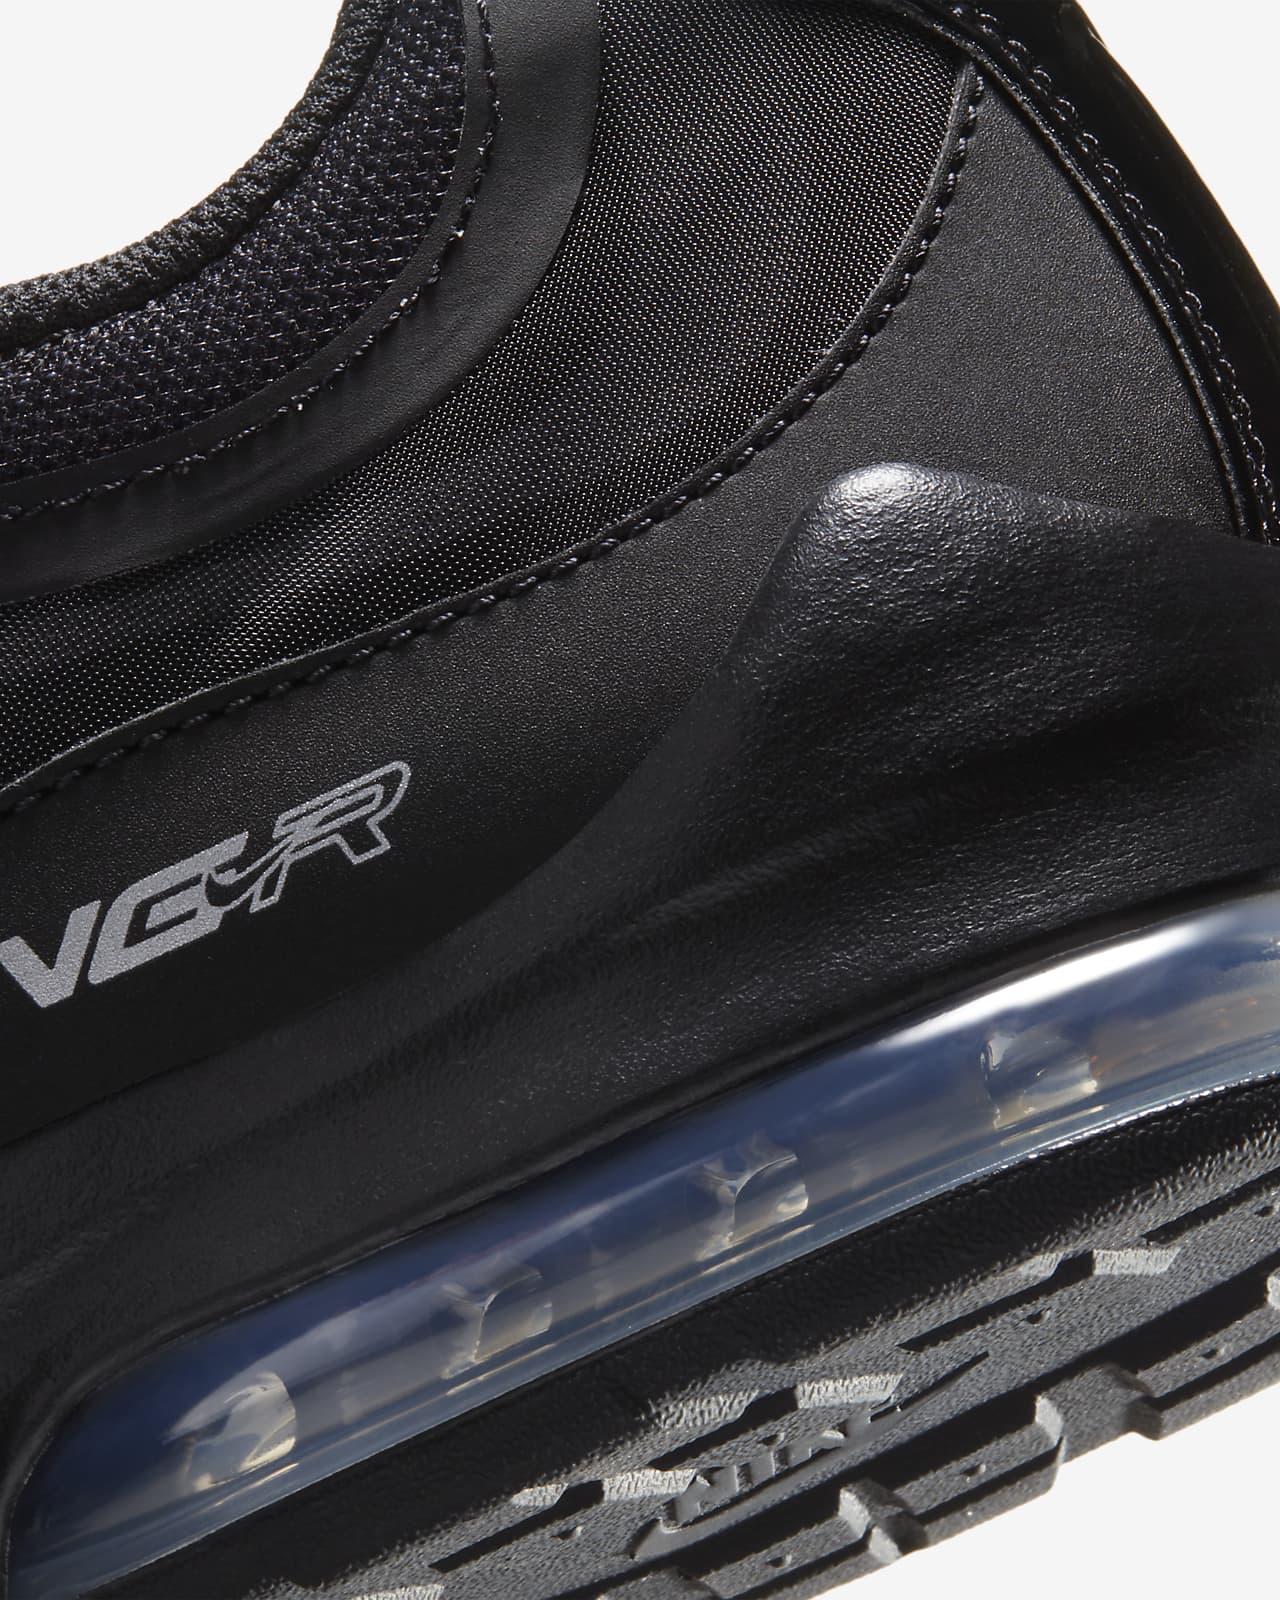 نجف لد Nike Air Max VG-R Men's Shoe نجف لد